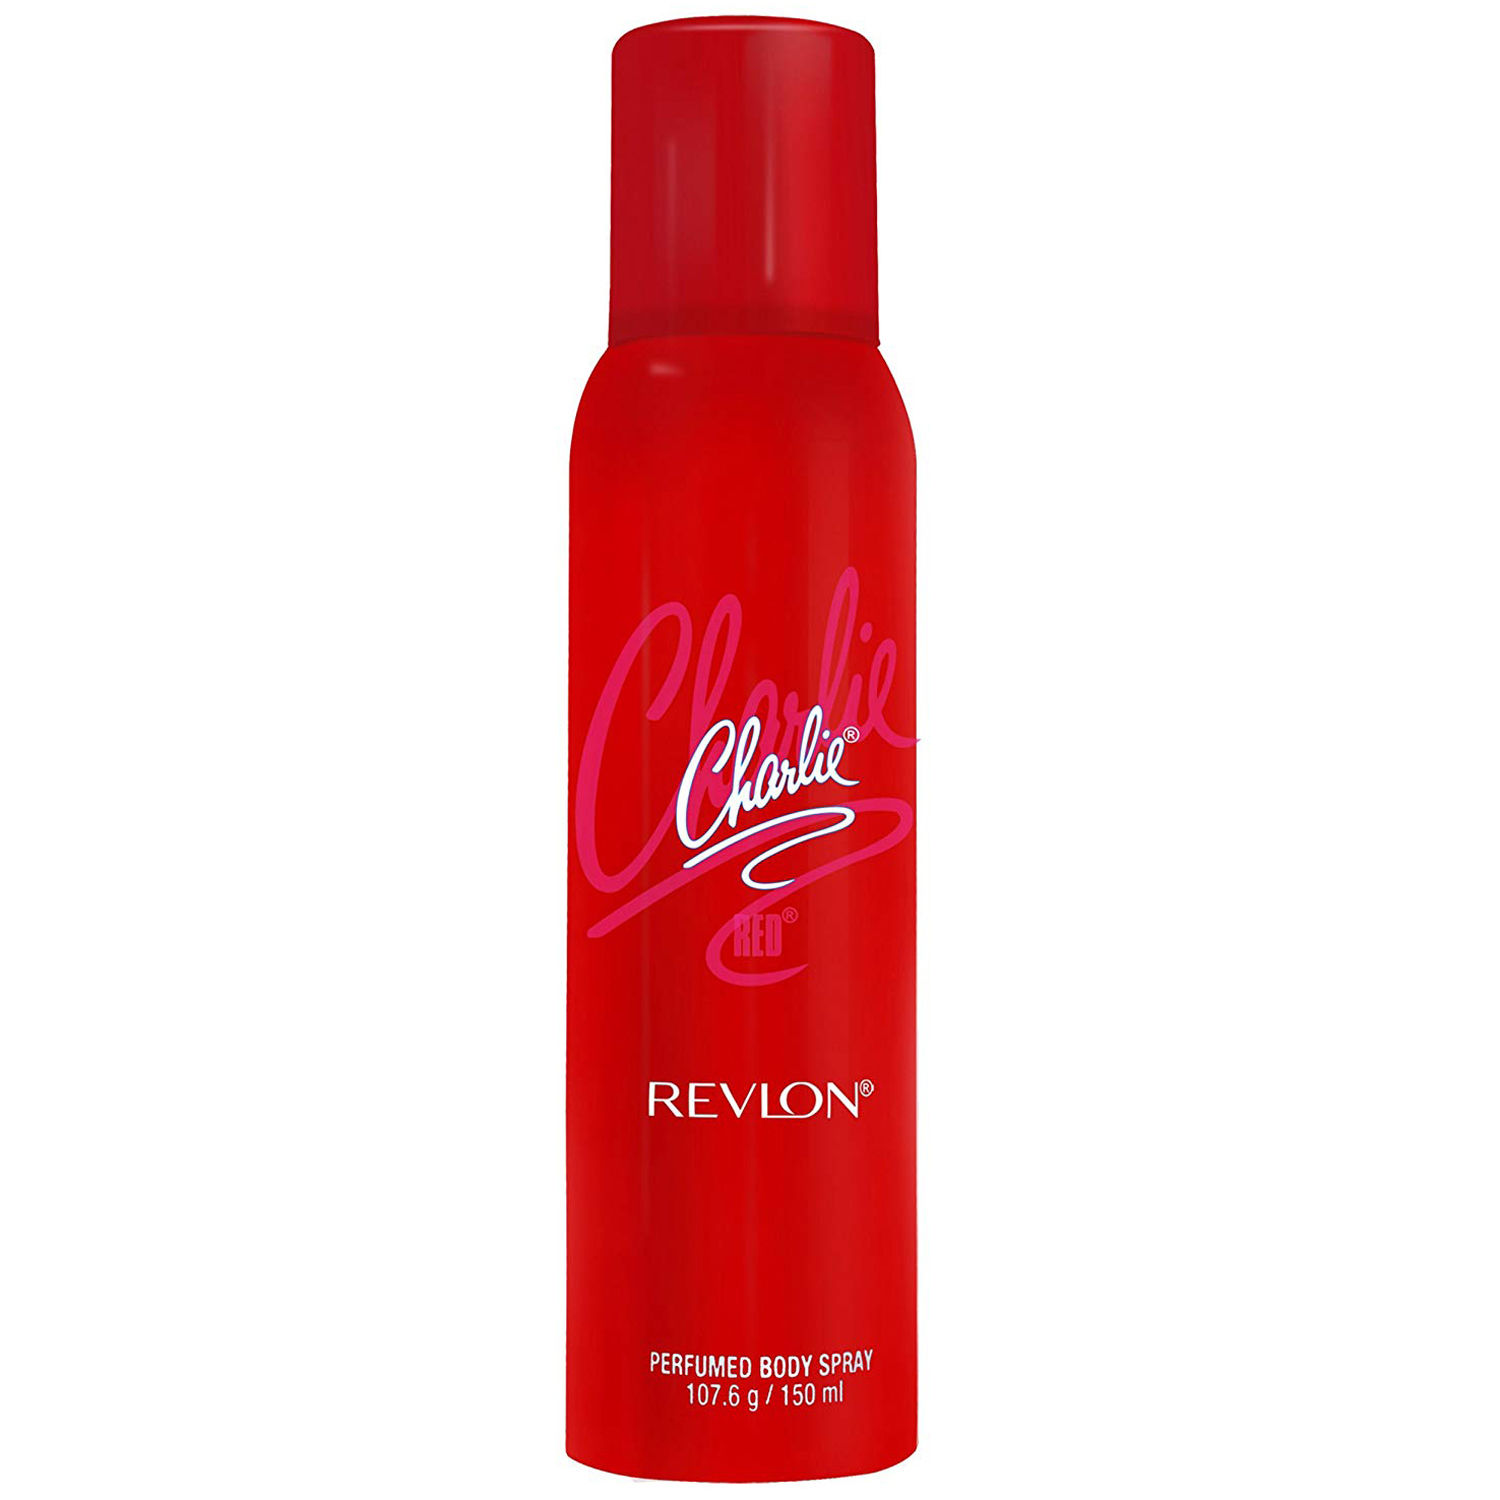 Buy Revlon Charlie Red Perfumed Body Spary, 150 ml Online